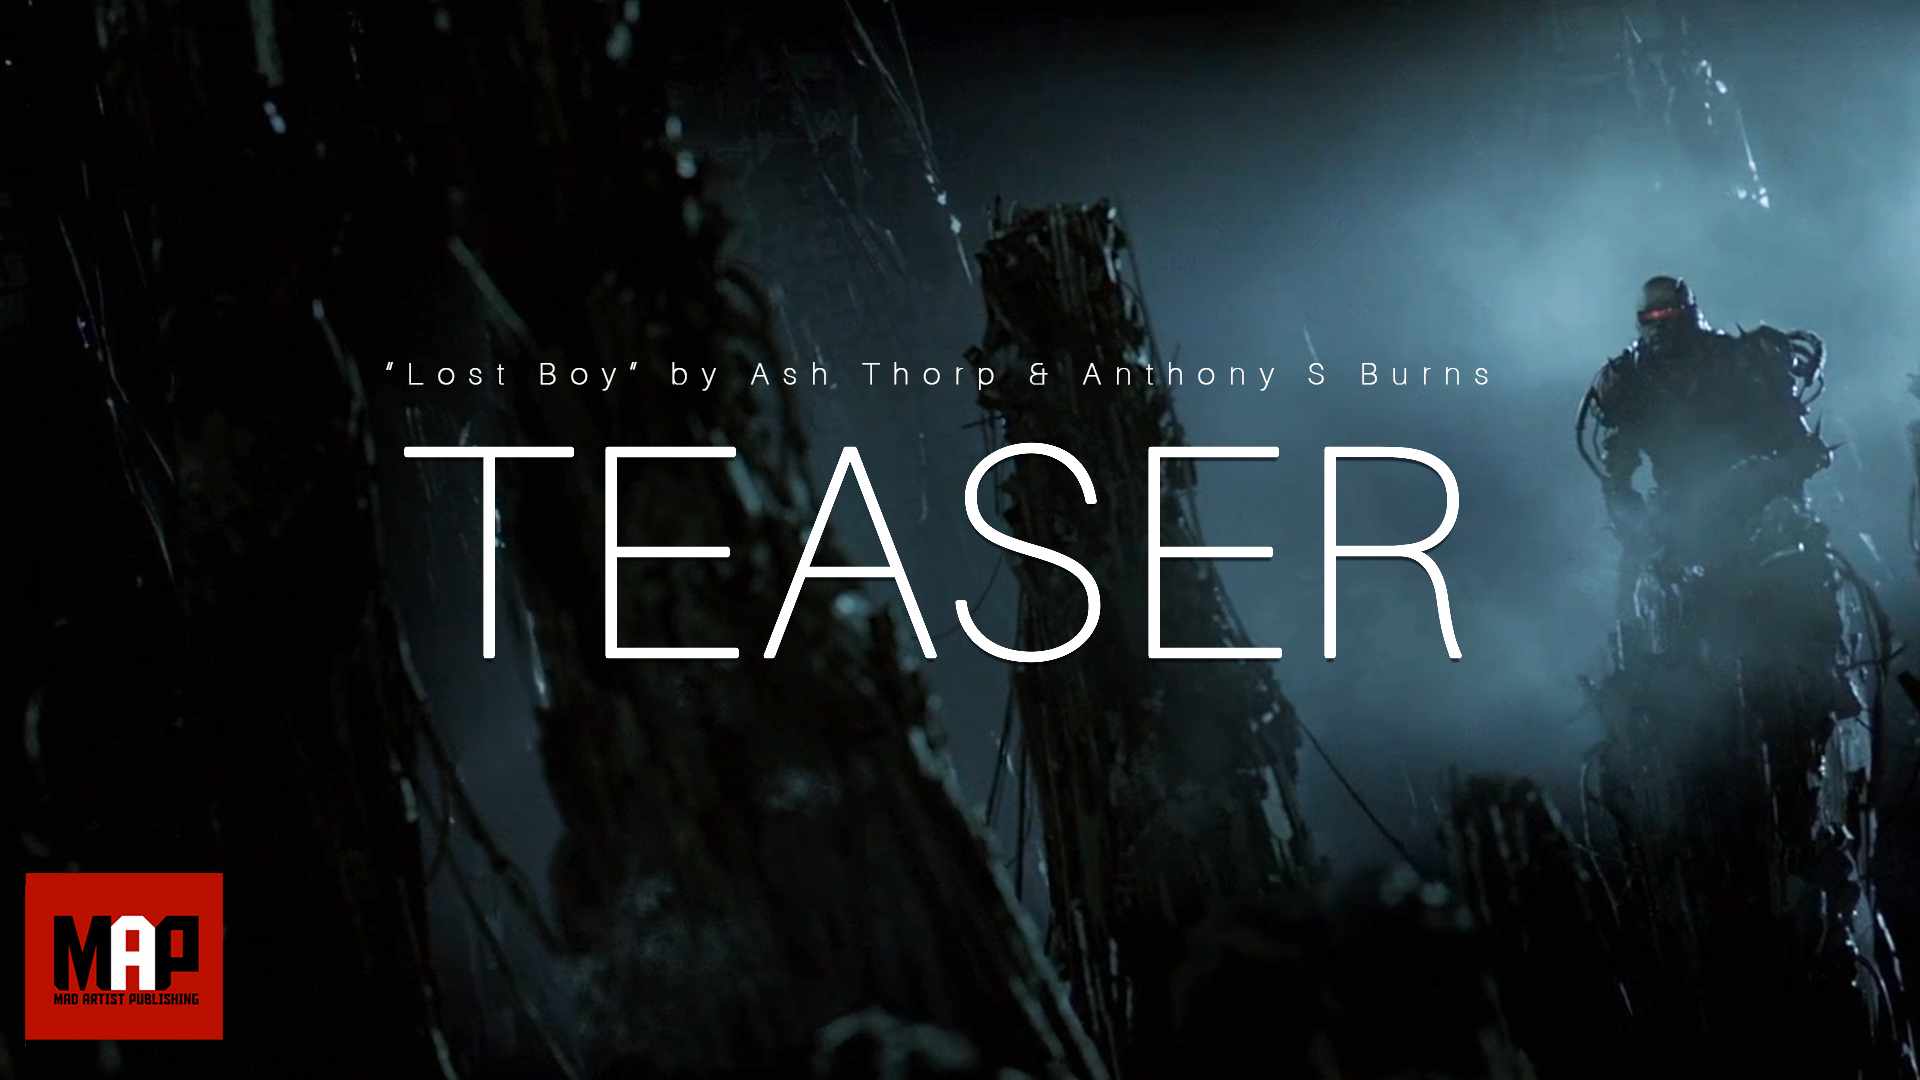 TEASER Trailer | VFX Sci-Fi Short Film ** LOST BOY ** Cyberpunk Thriller (Ash Thorp/Anthony S Burns)